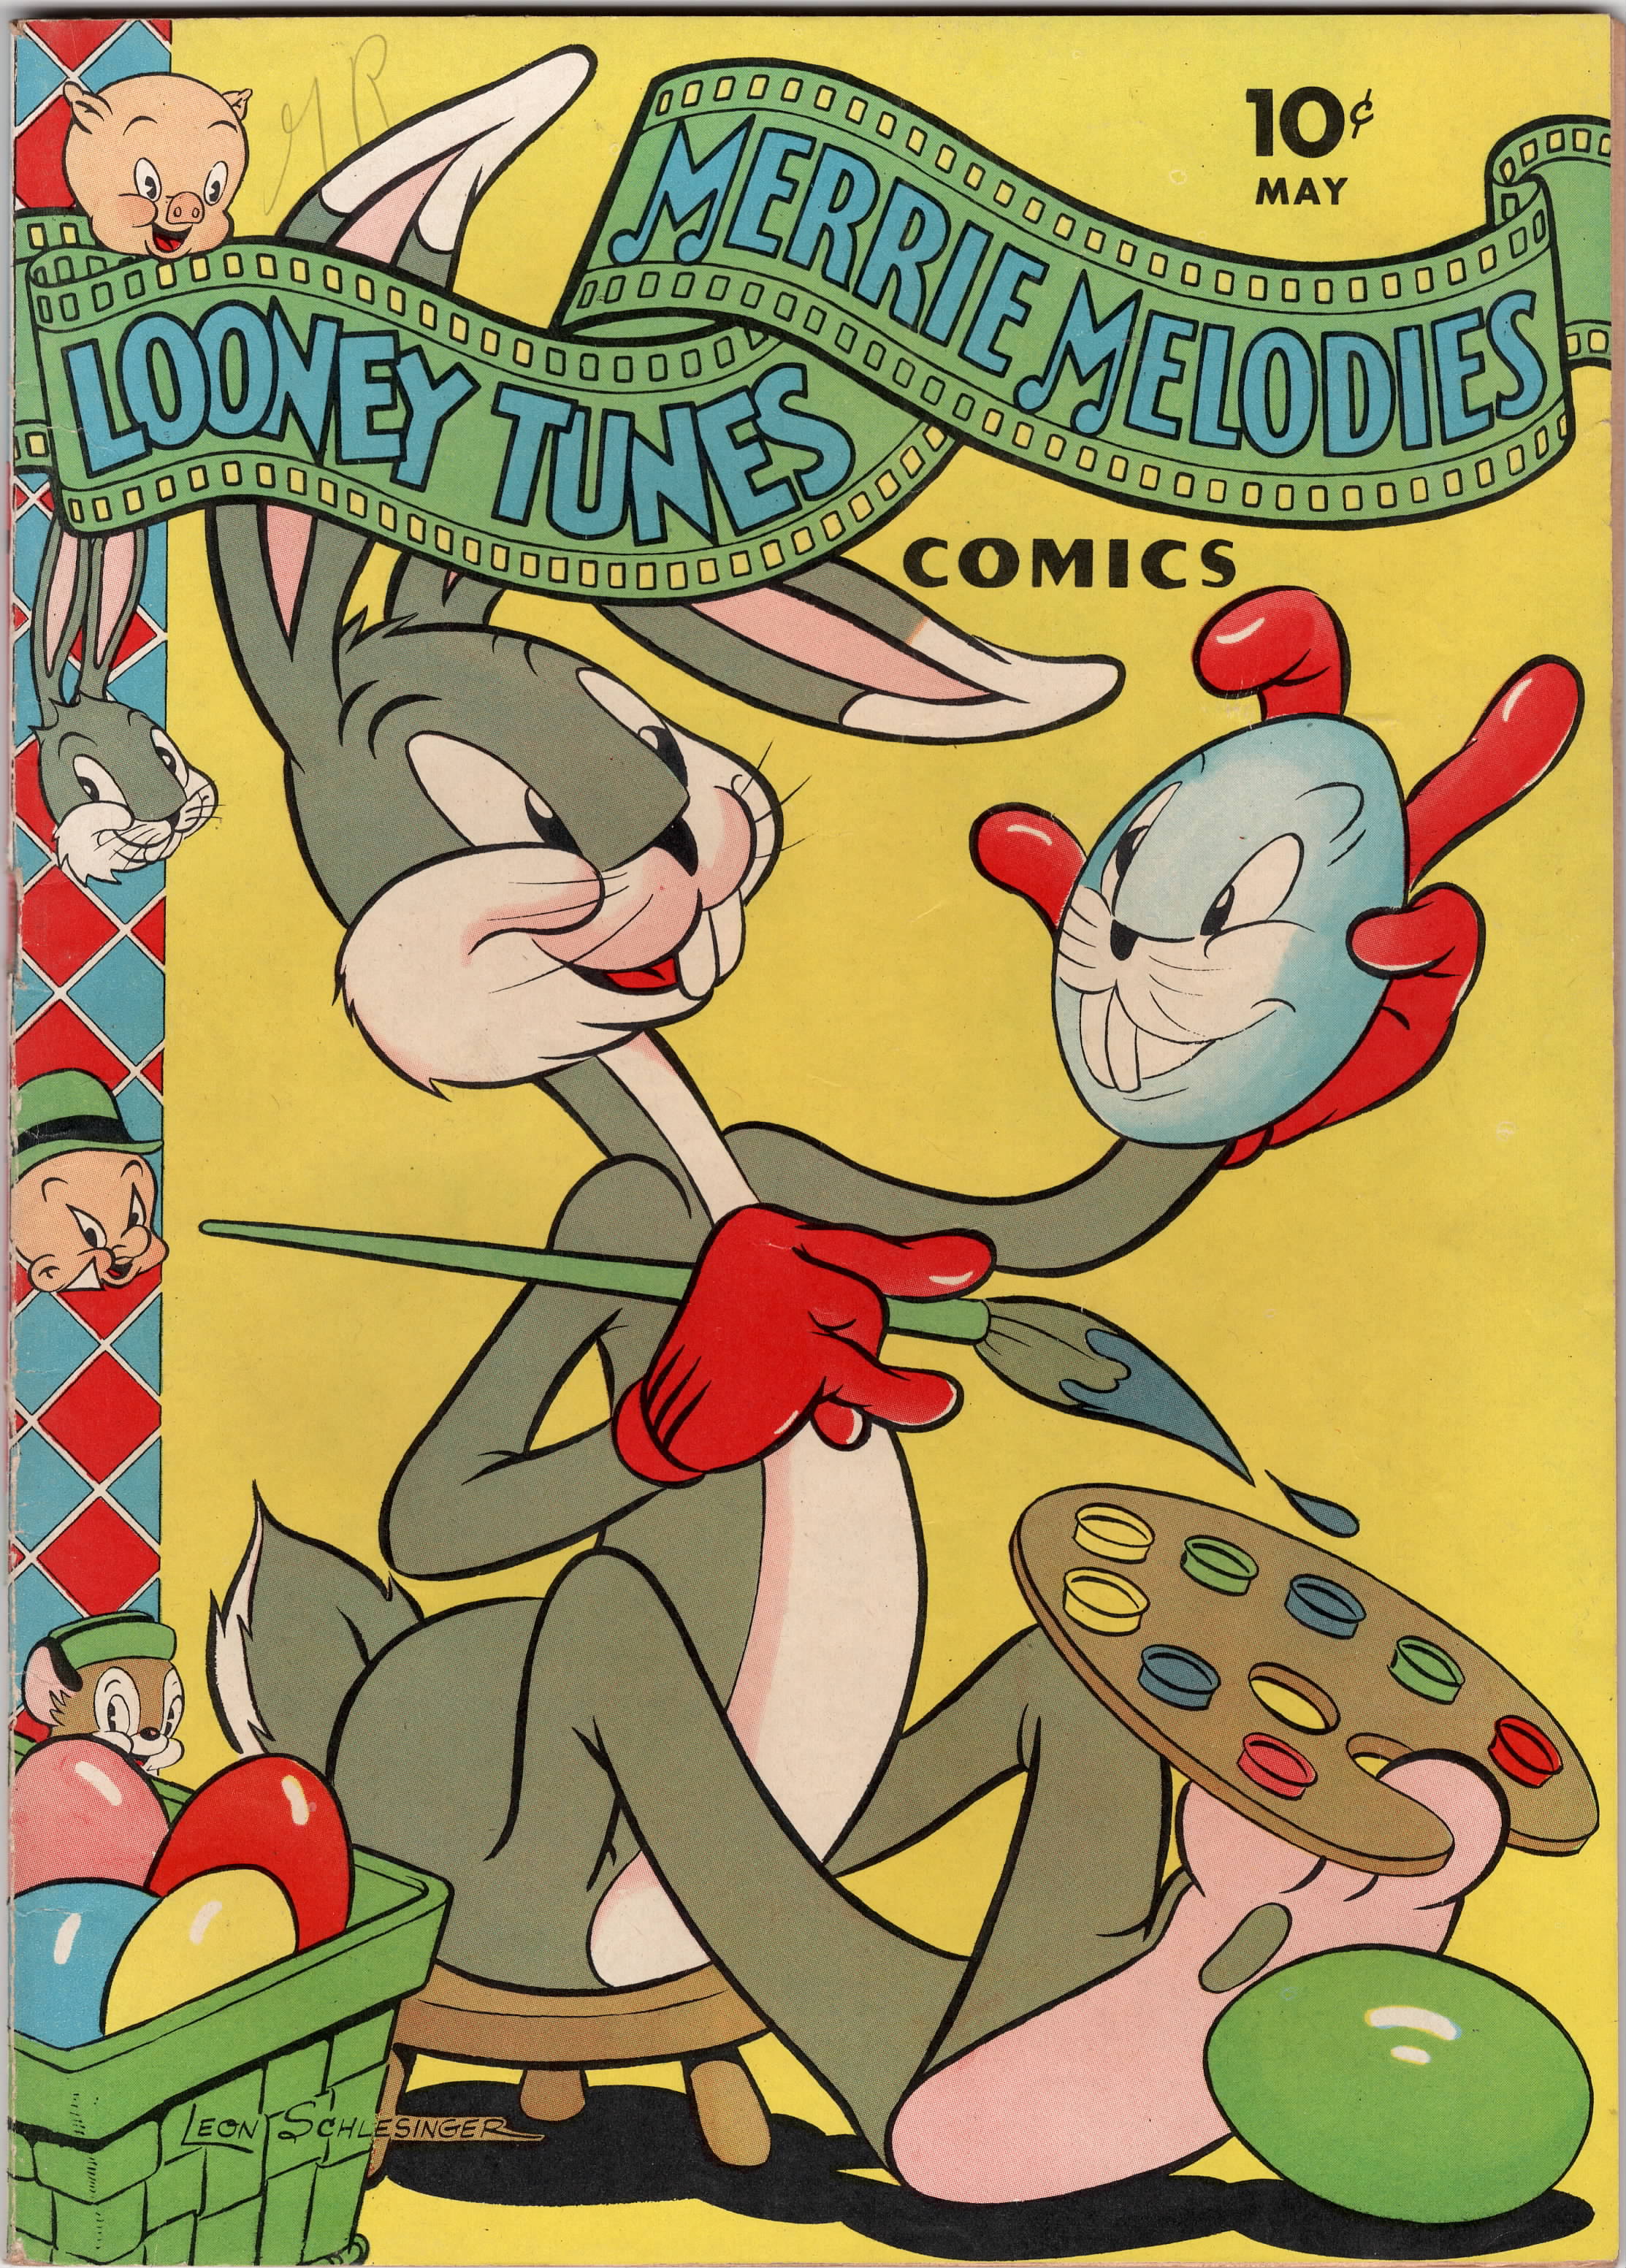 Looney Tunes & Merrie Melodies Comics #019